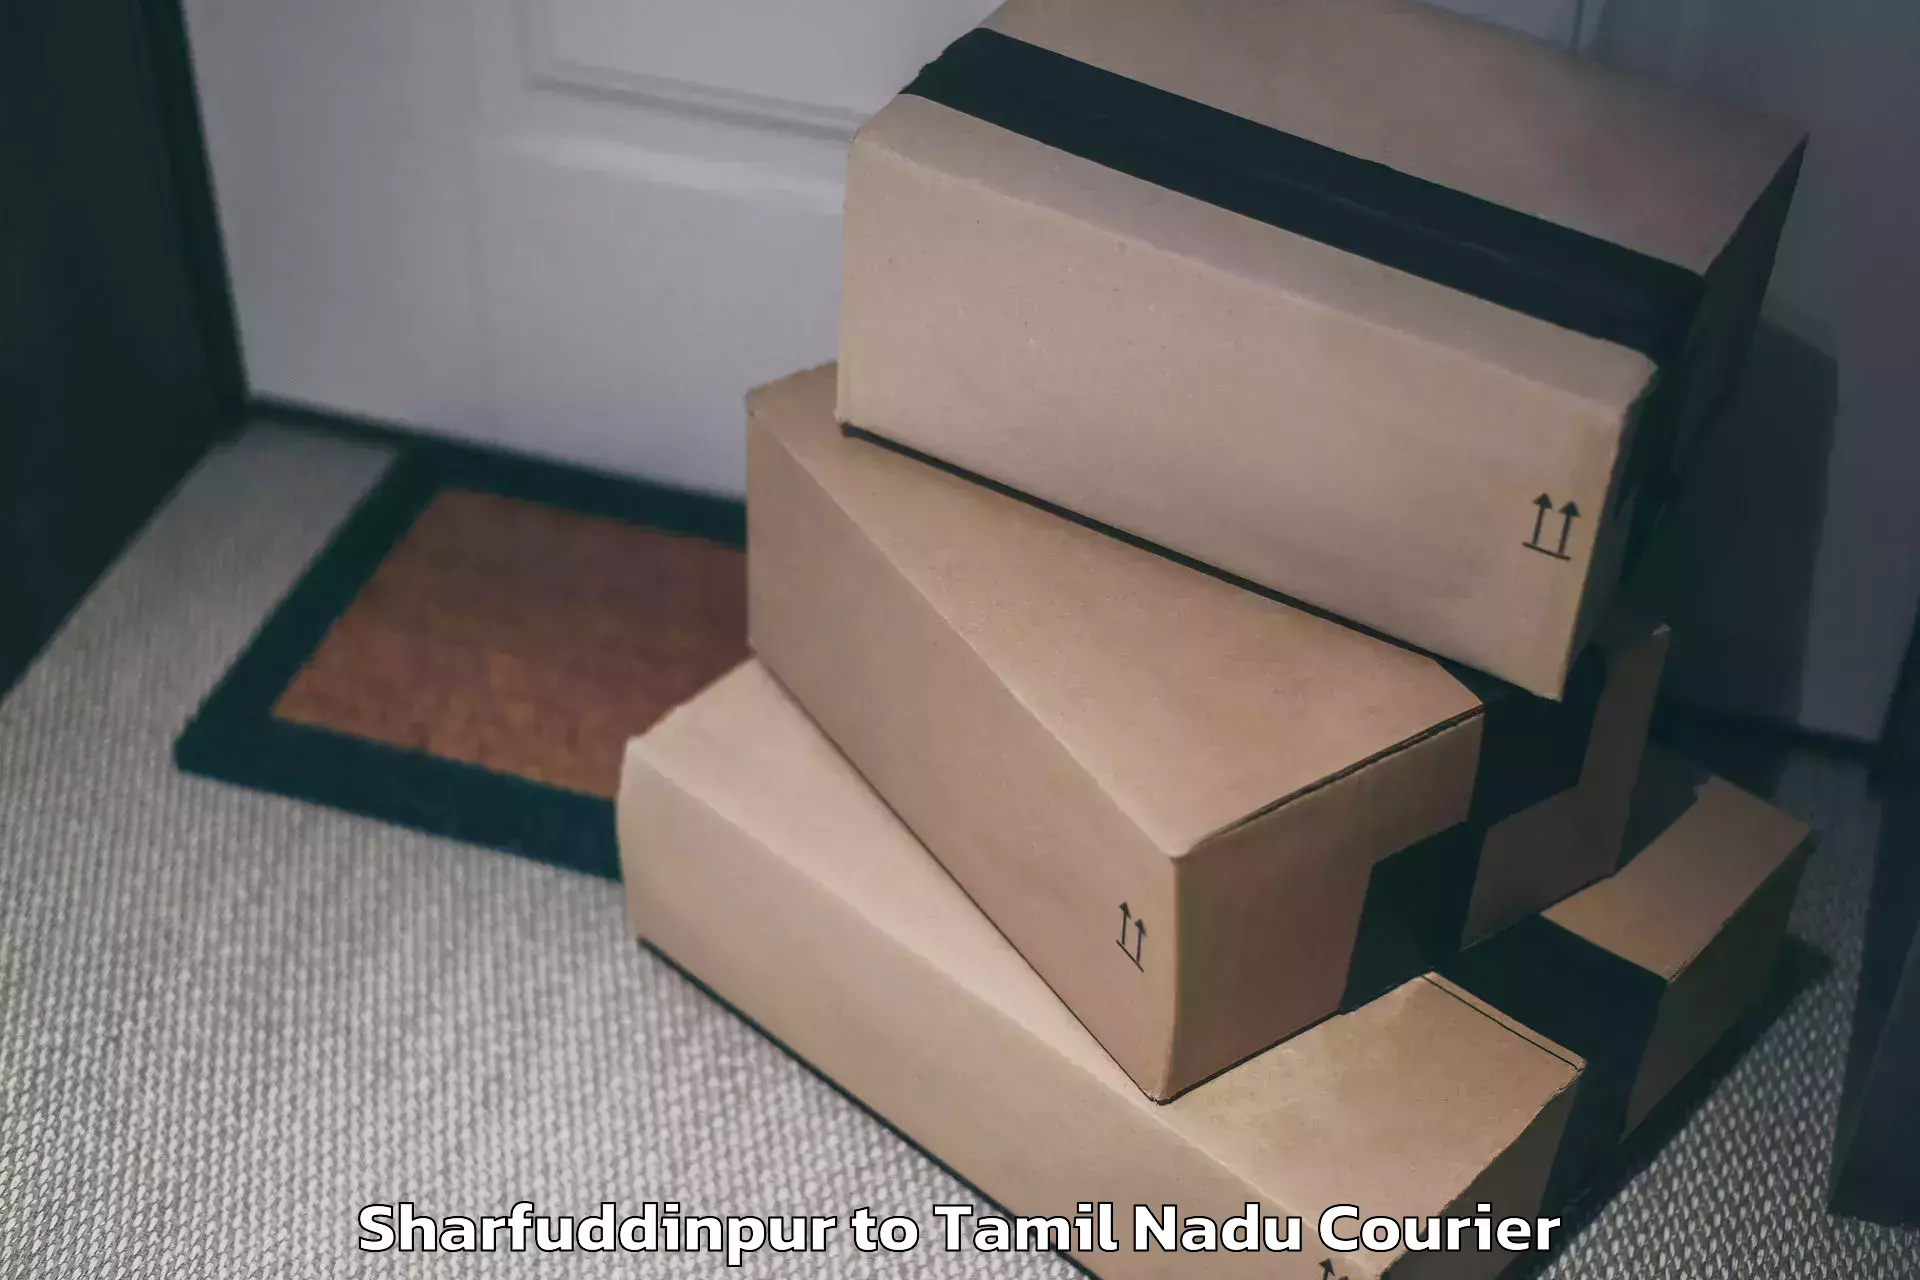 Online luggage shipping booking Sharfuddinpur to Perambur